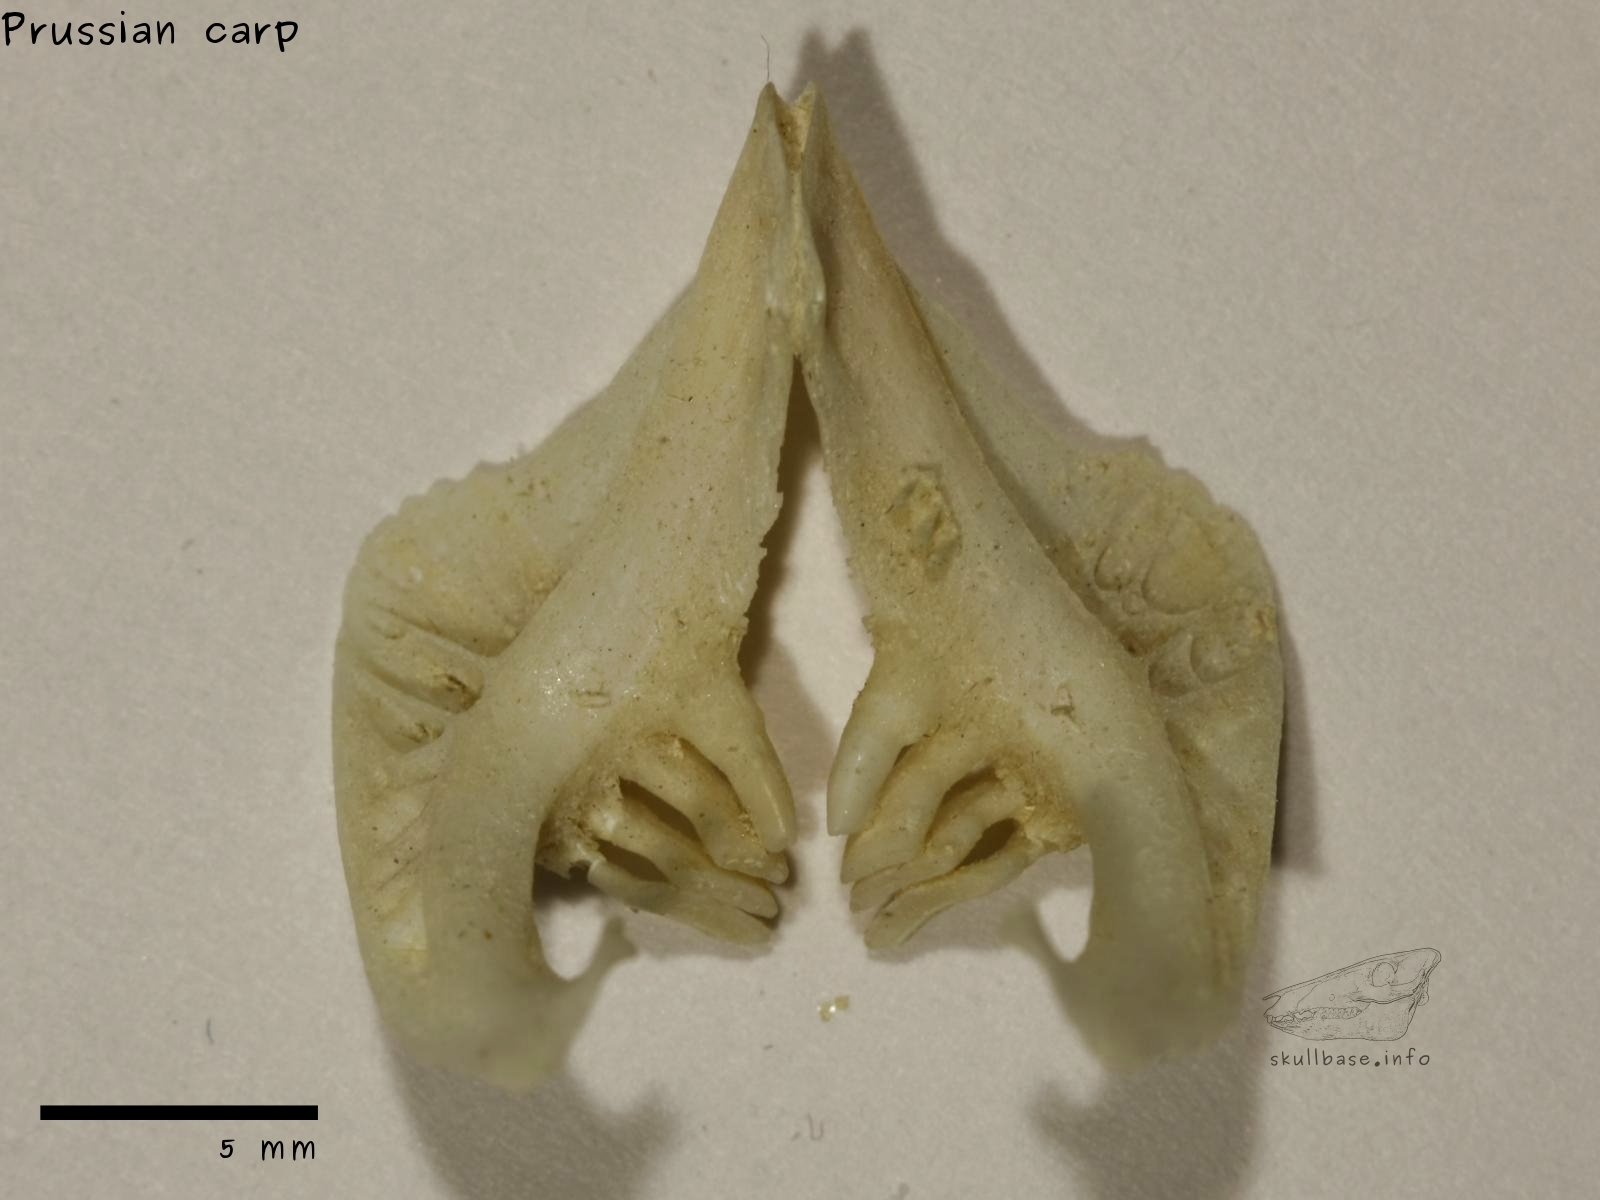 Prussian carp (Carassius gibelio) pharyngeal teeth